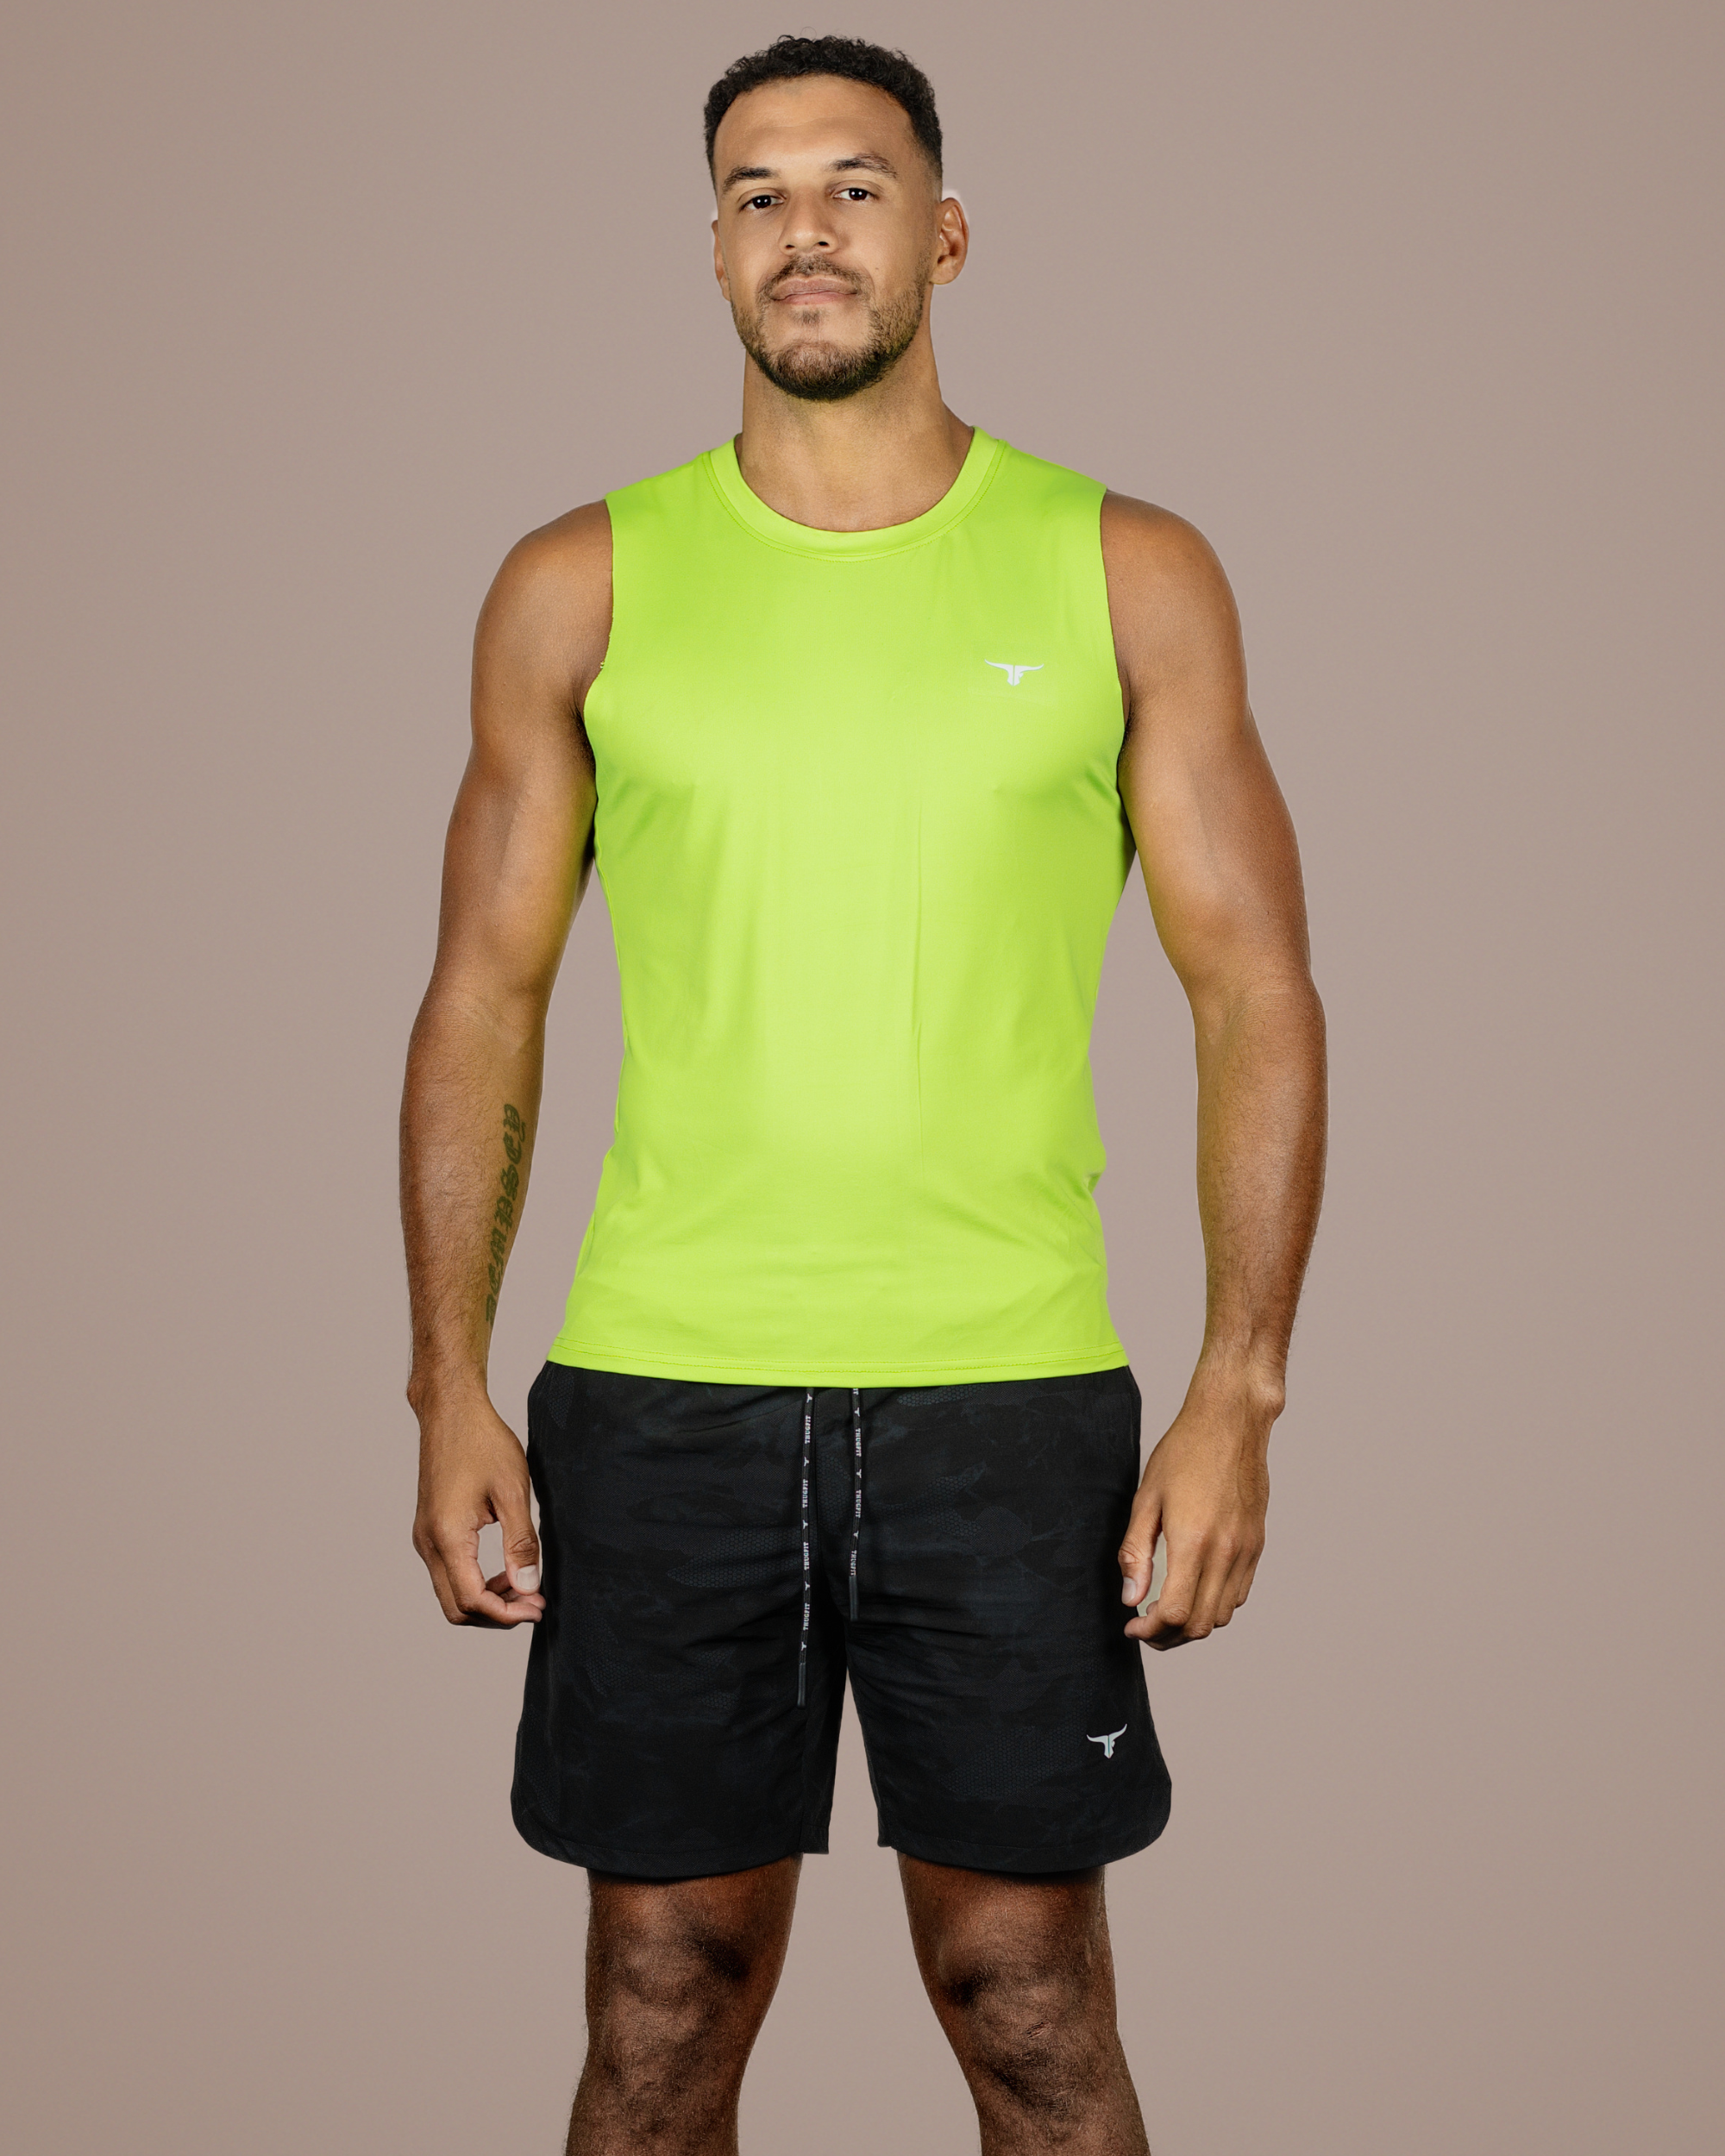 LiftRift Sleeveless Men's Slim Fit Tank Top - Fluorescent green - THUGFIT